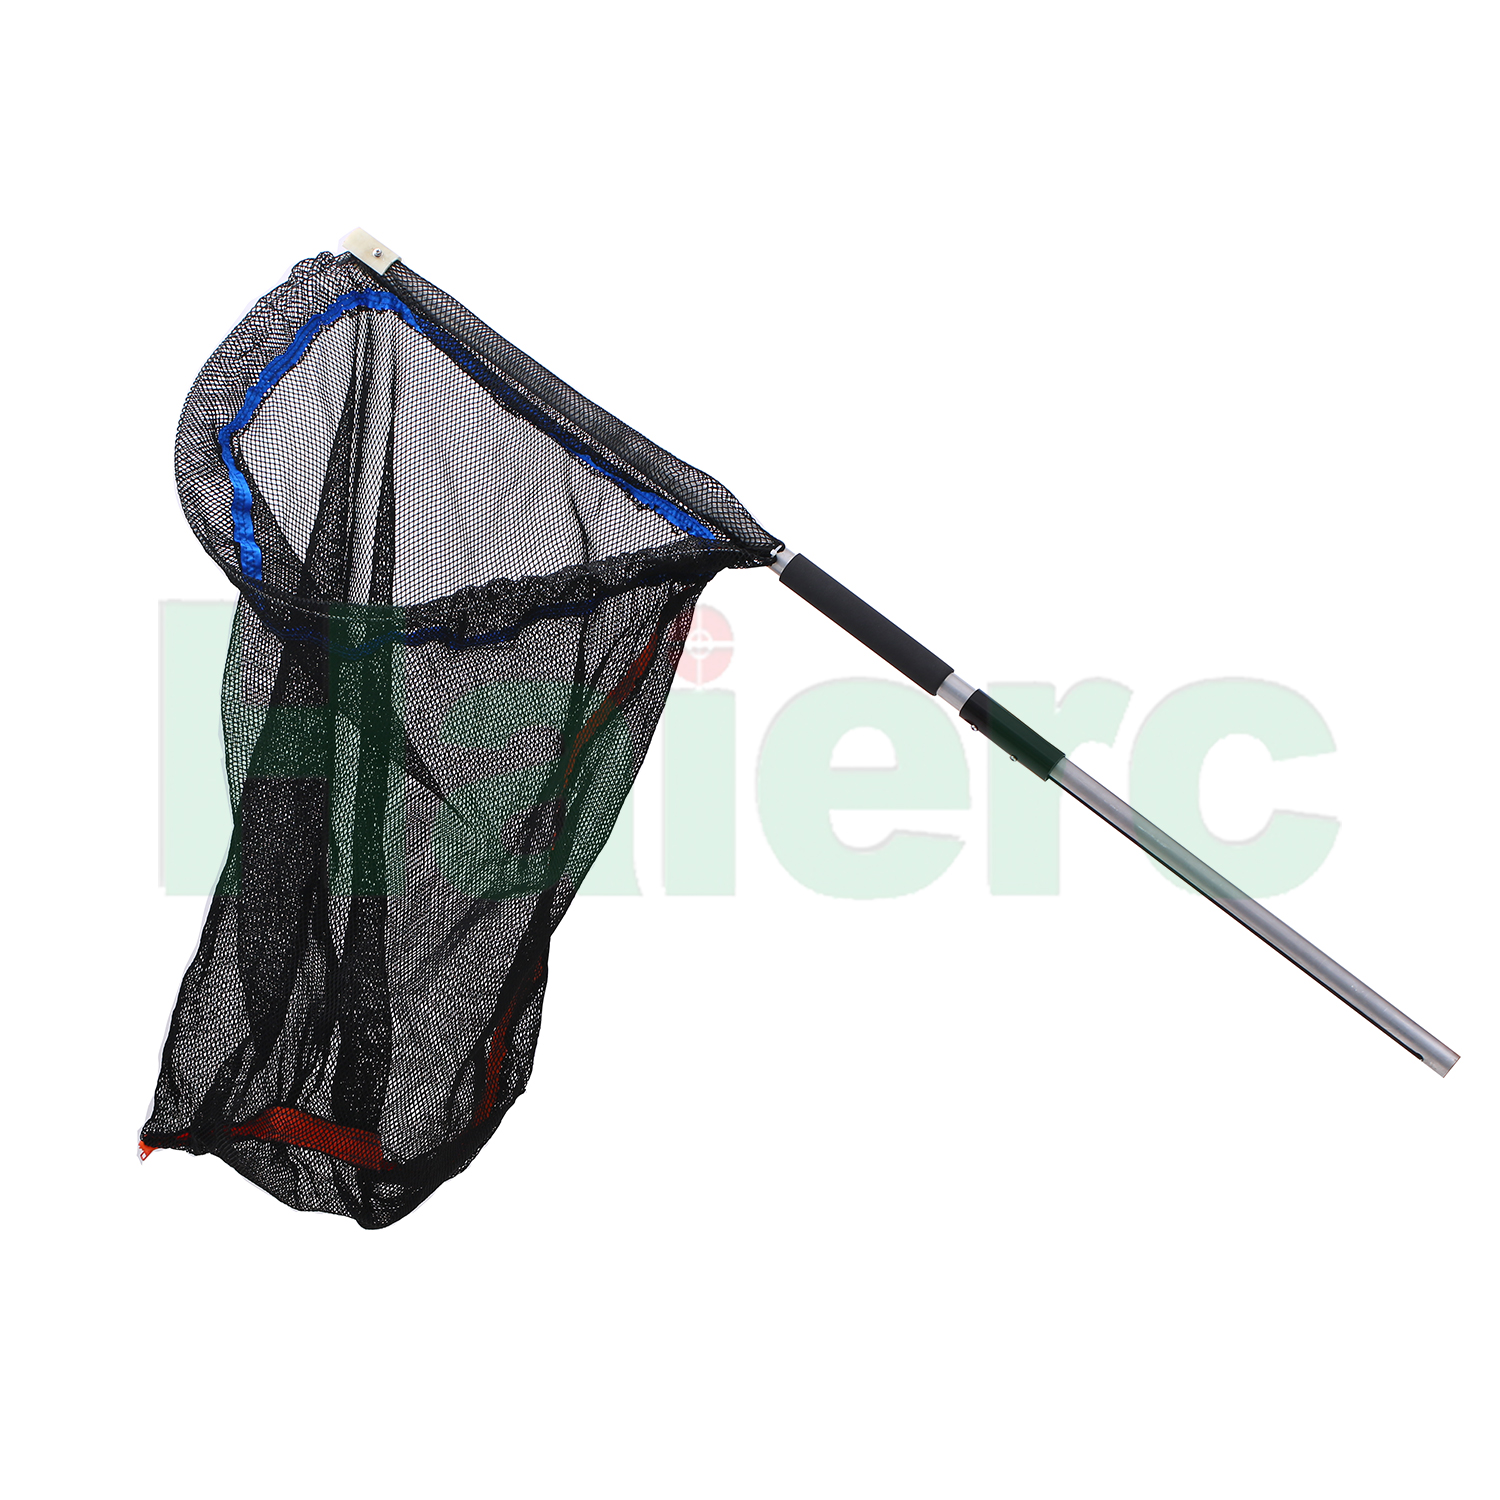 >Haierc Long Handle Outdoor Catching Fishes Net Wildcat Net HC3301